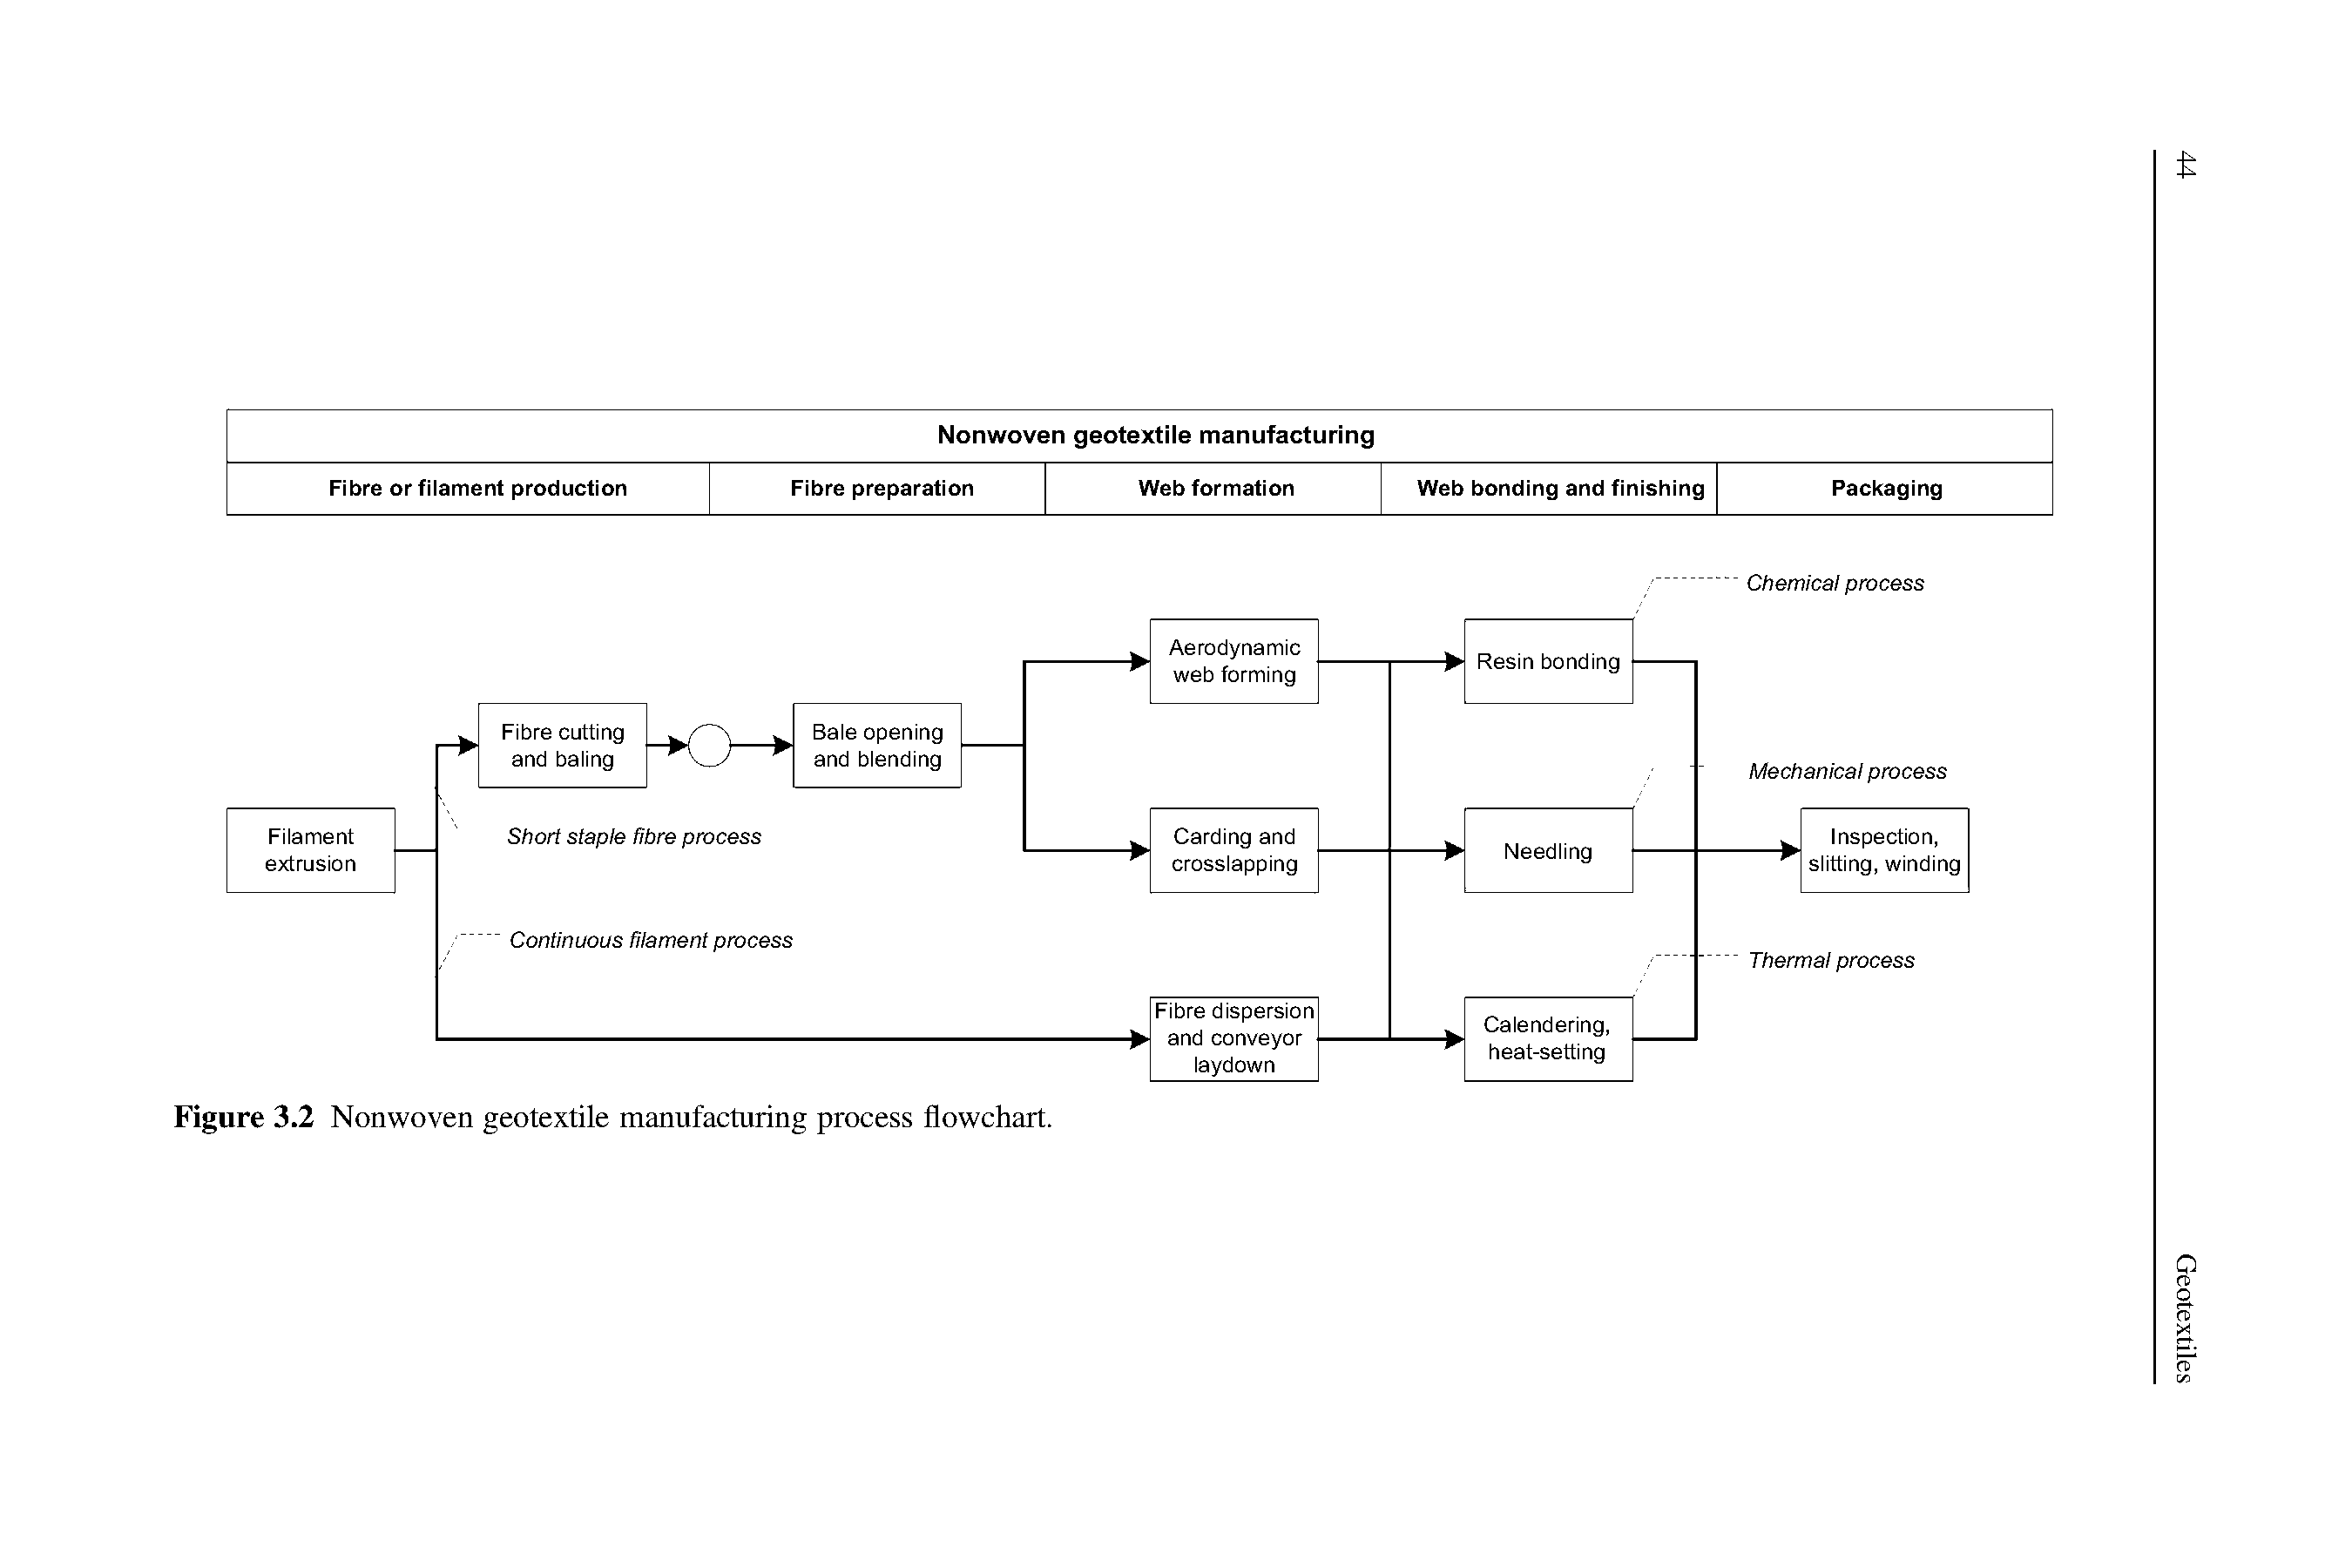 Figure 3.2 Nonwoven geotextile manufacturing process flowchart.